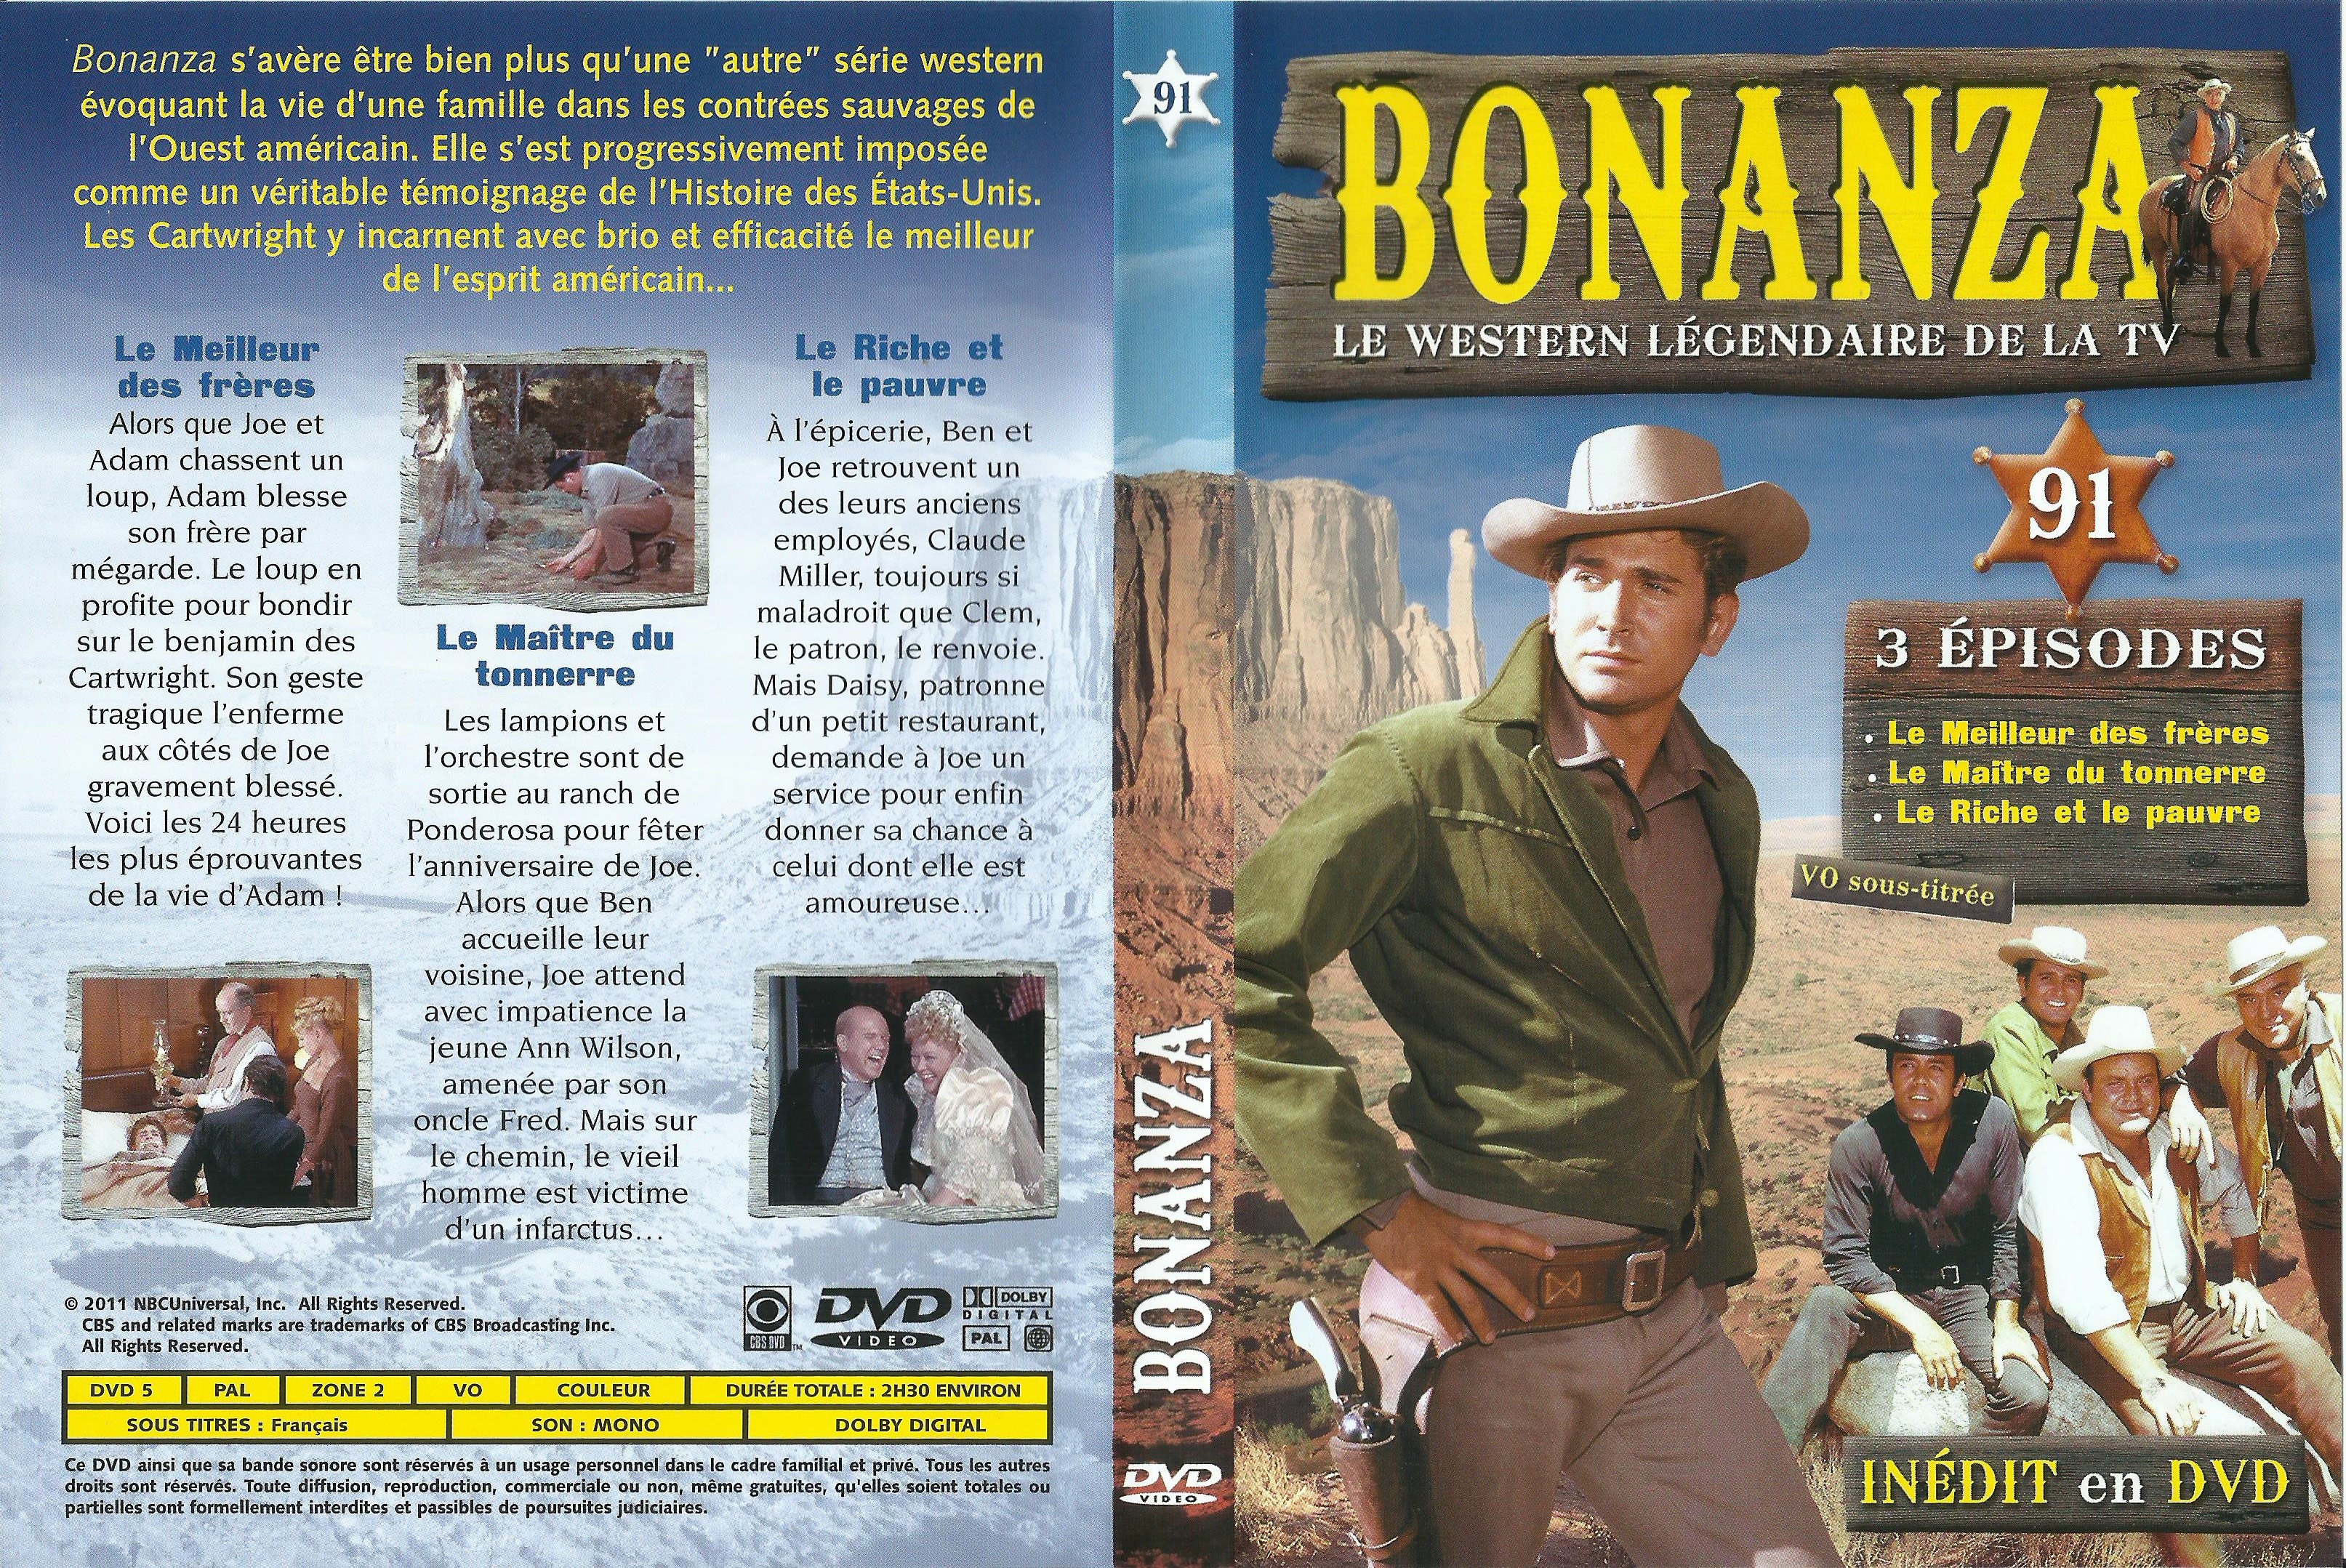 Jaquette DVD Bonanza vol 91